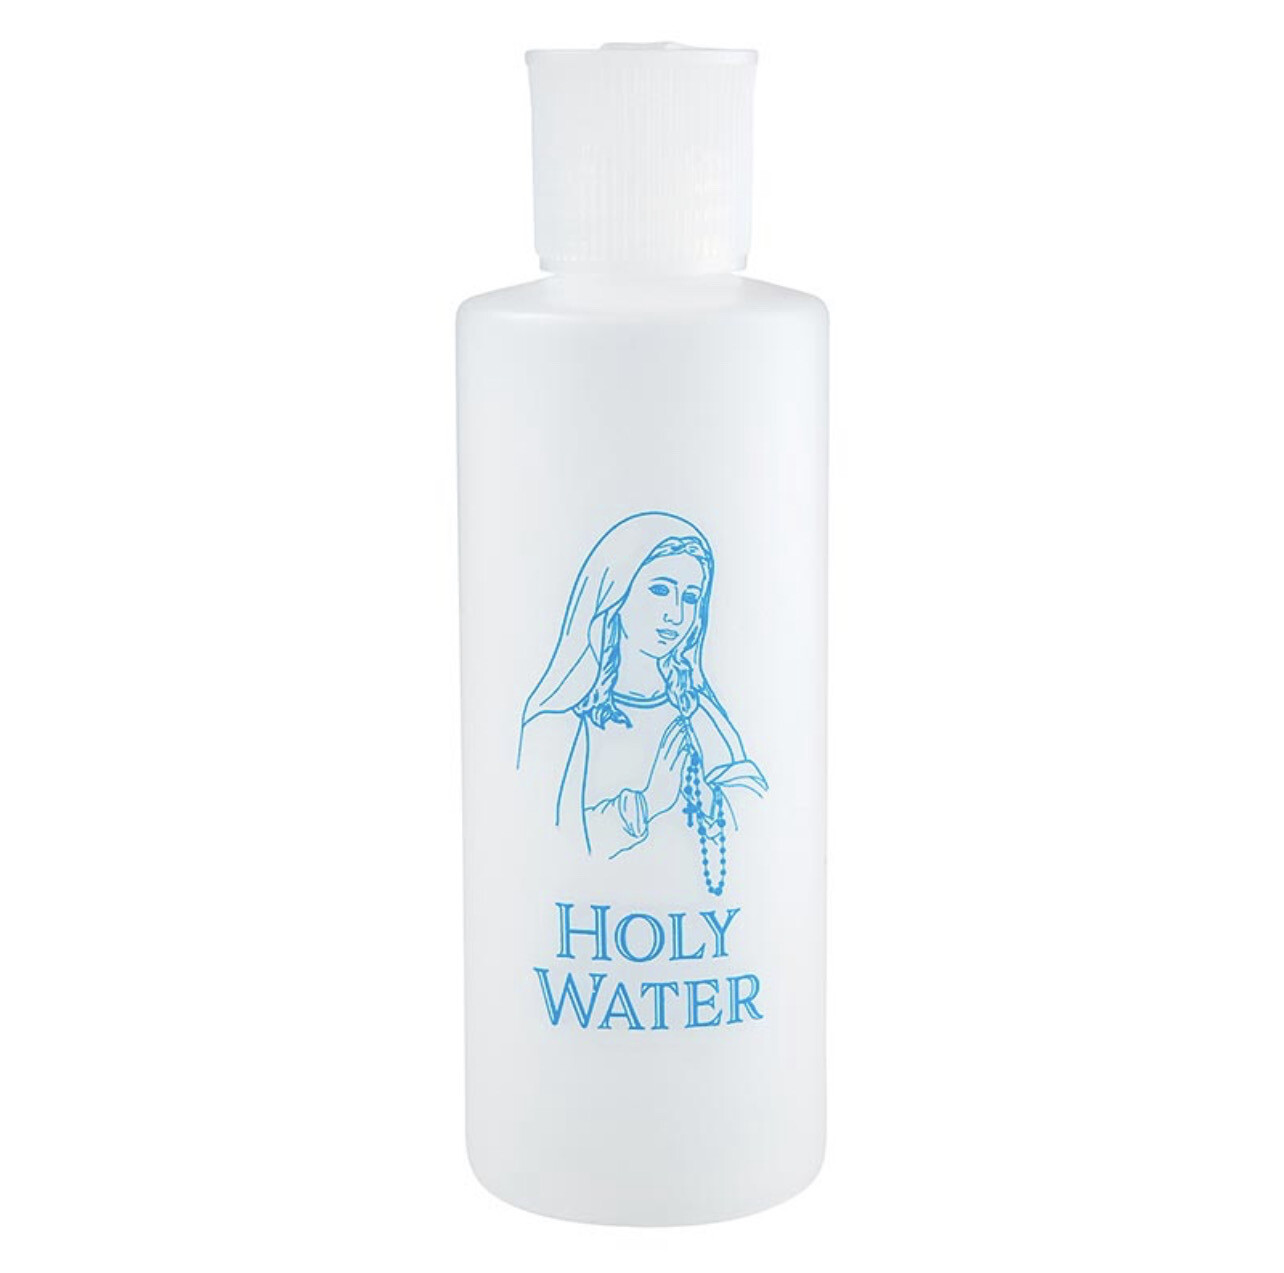 Holy Water Bottle Cylindrical Plastic 2oz 